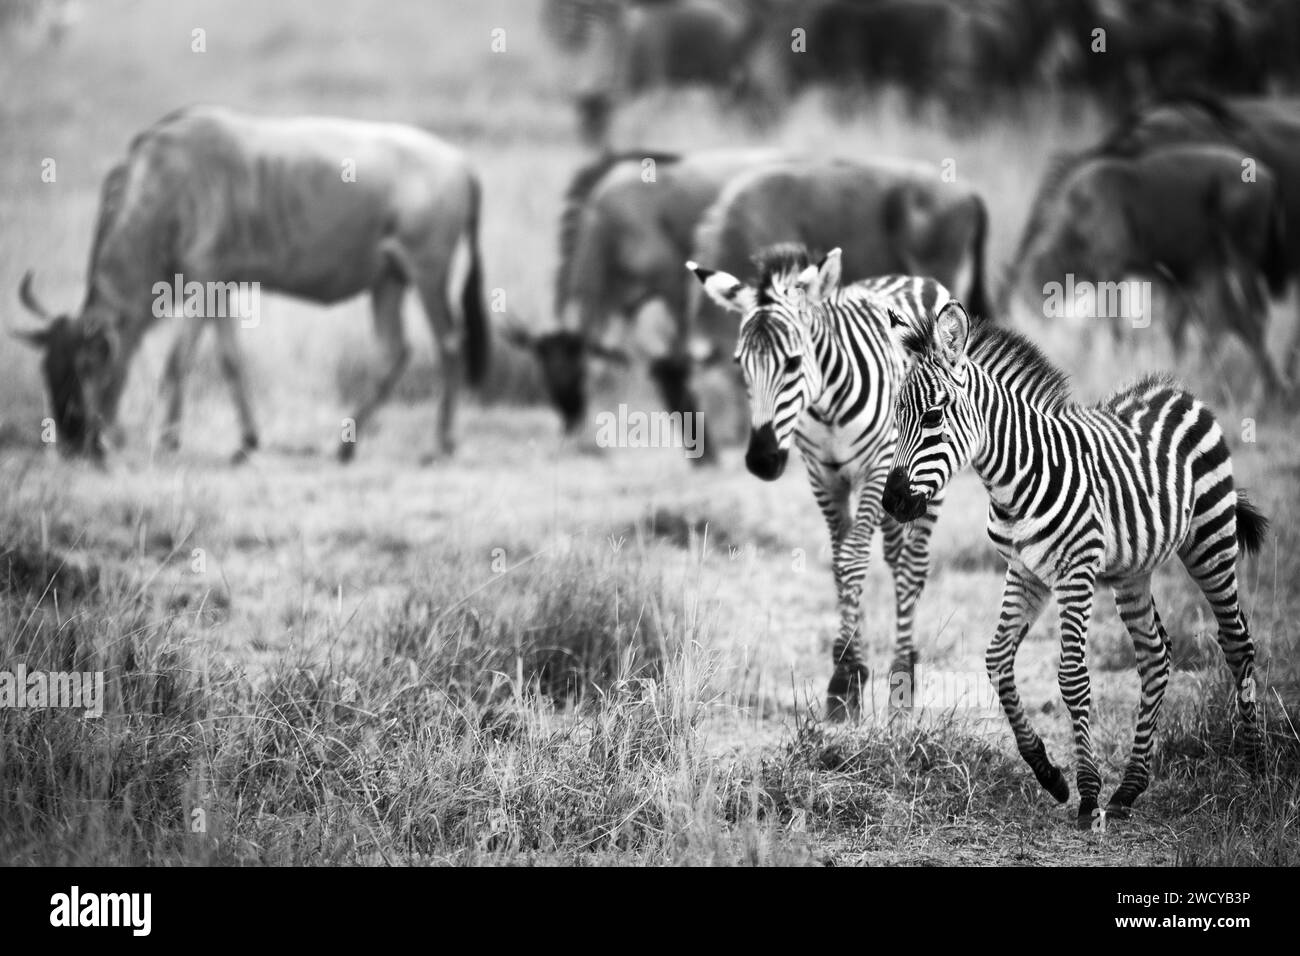 Black and white portrait of zebra in kenya savannah Stock Photo